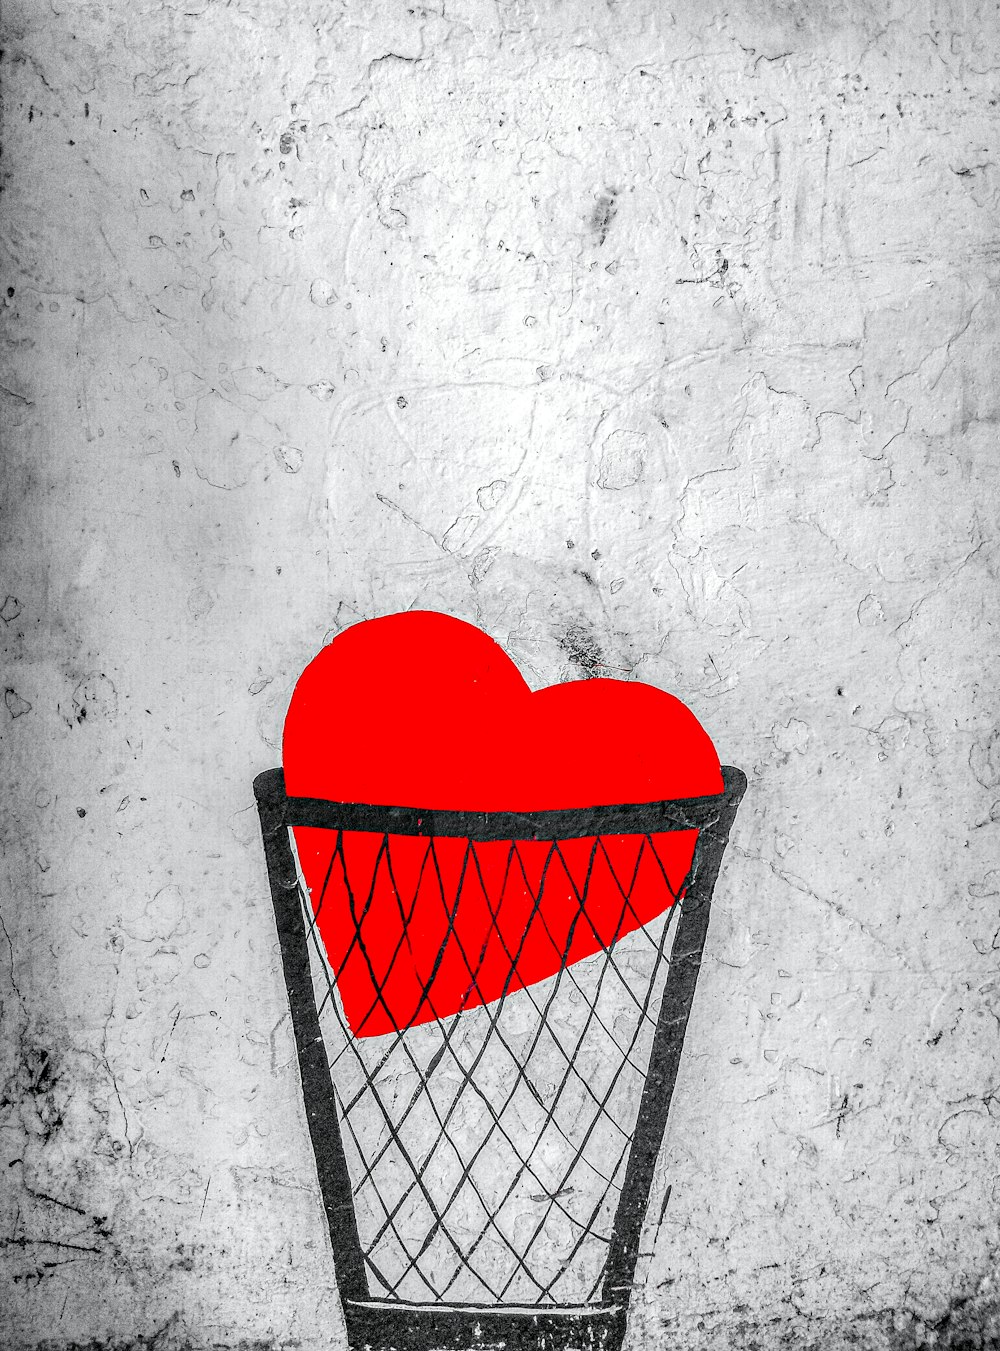 red heart illustration on white background